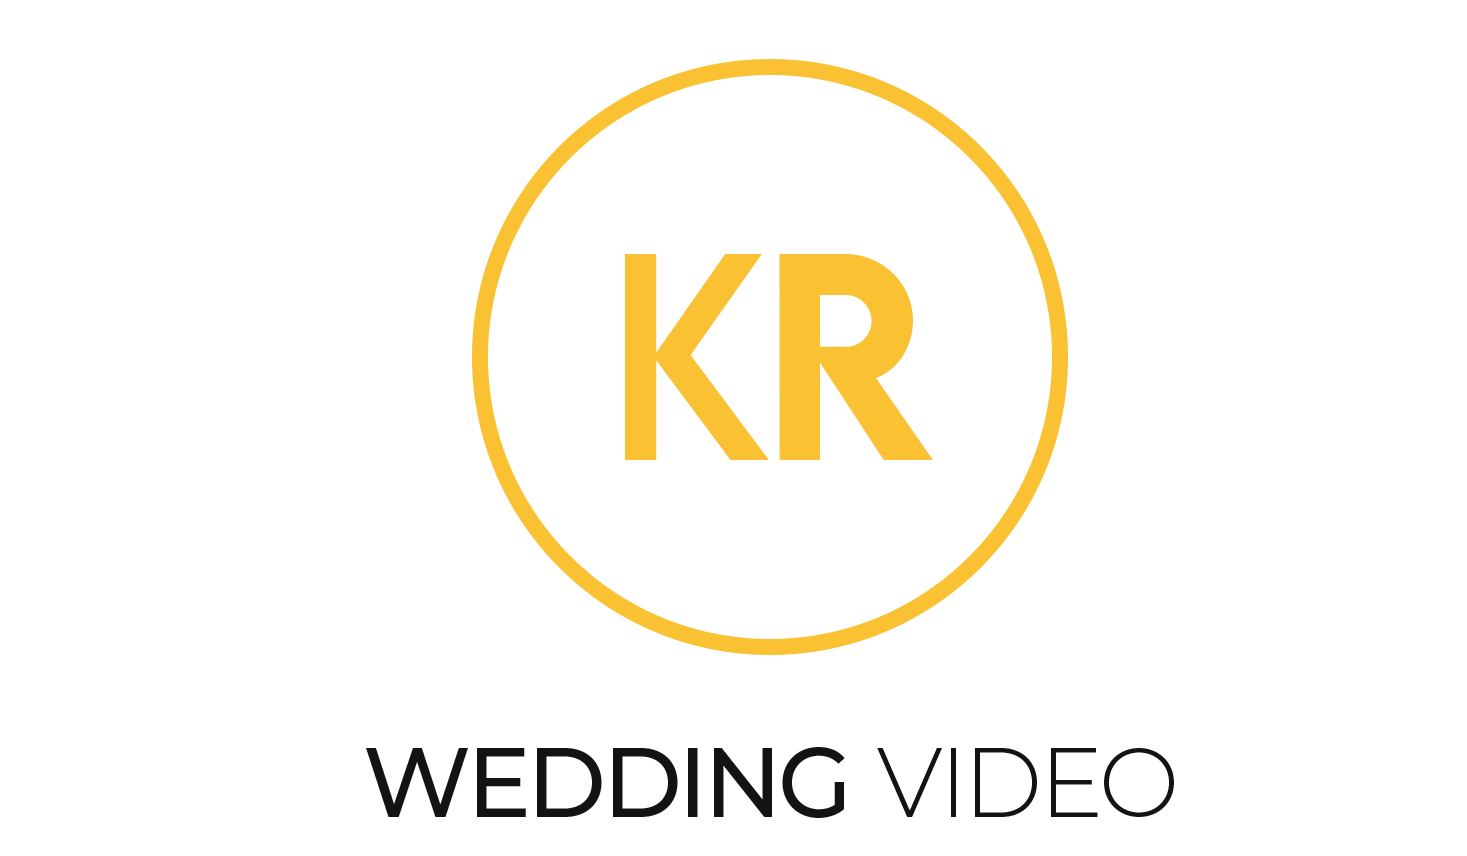 KR Wedding Video